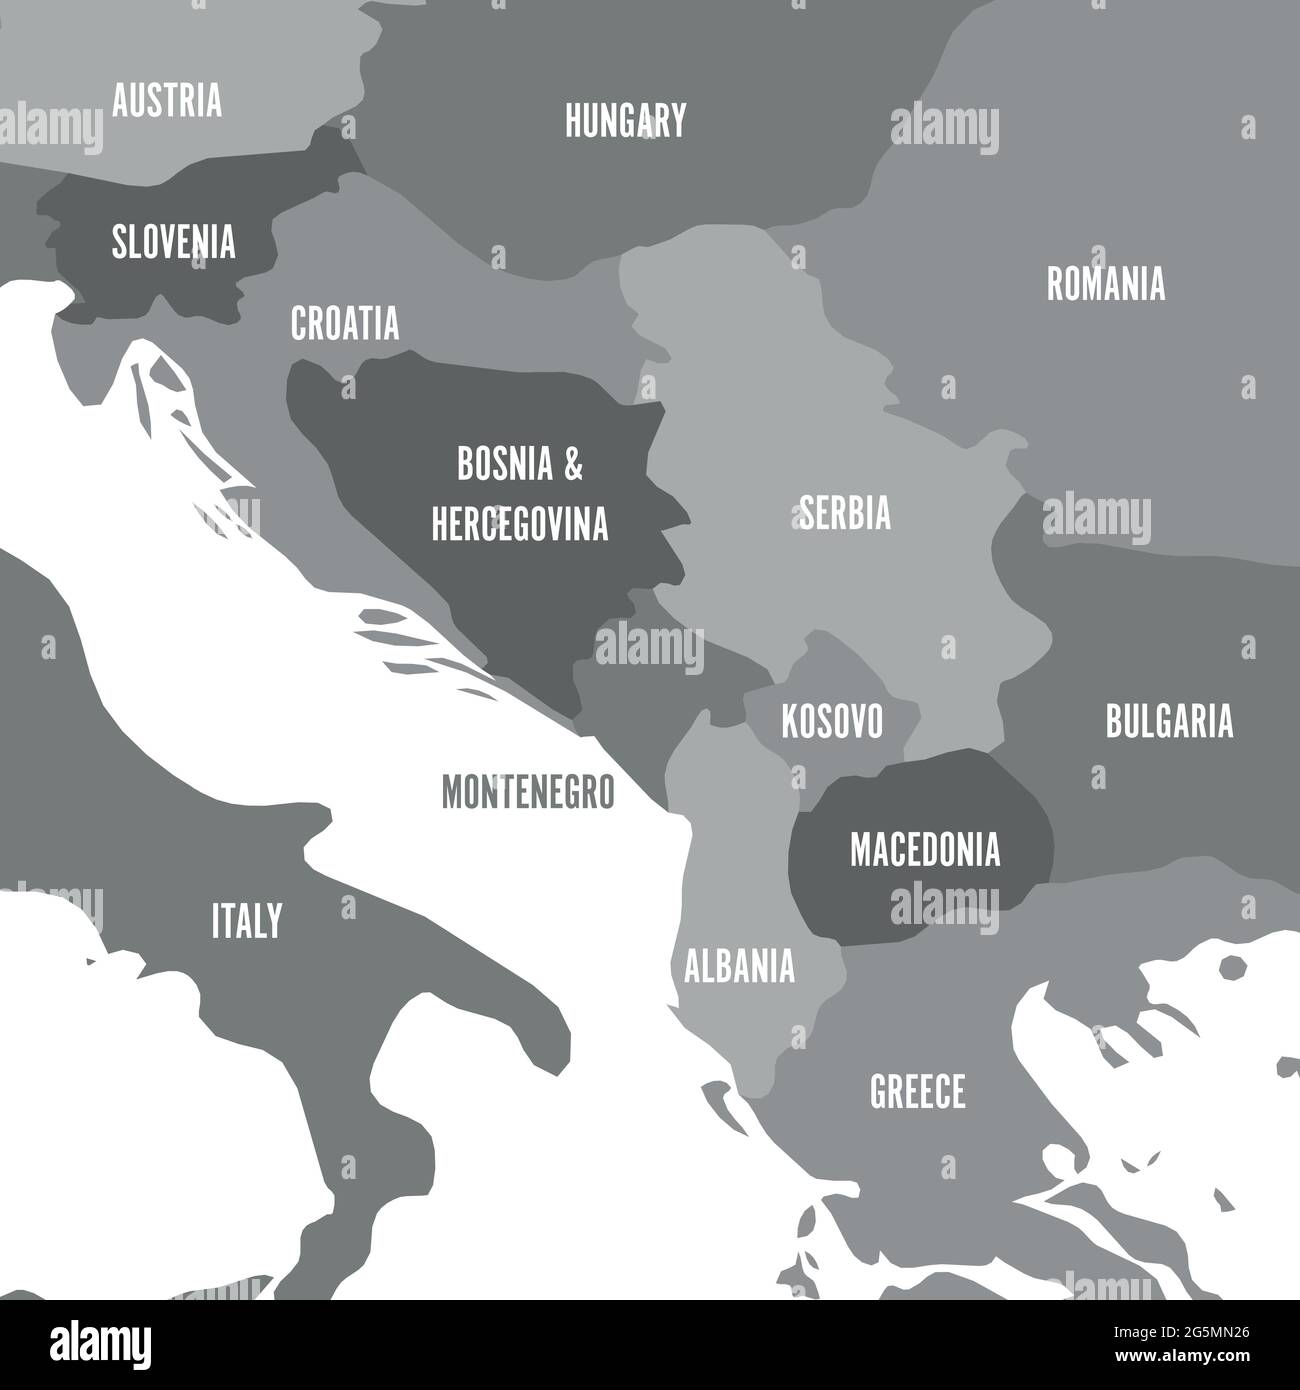 Politische Landkarte des Balkans - Staaten der Balkanhalbinsel. Vektorgrafik in vier Graustufen Stock Vektor